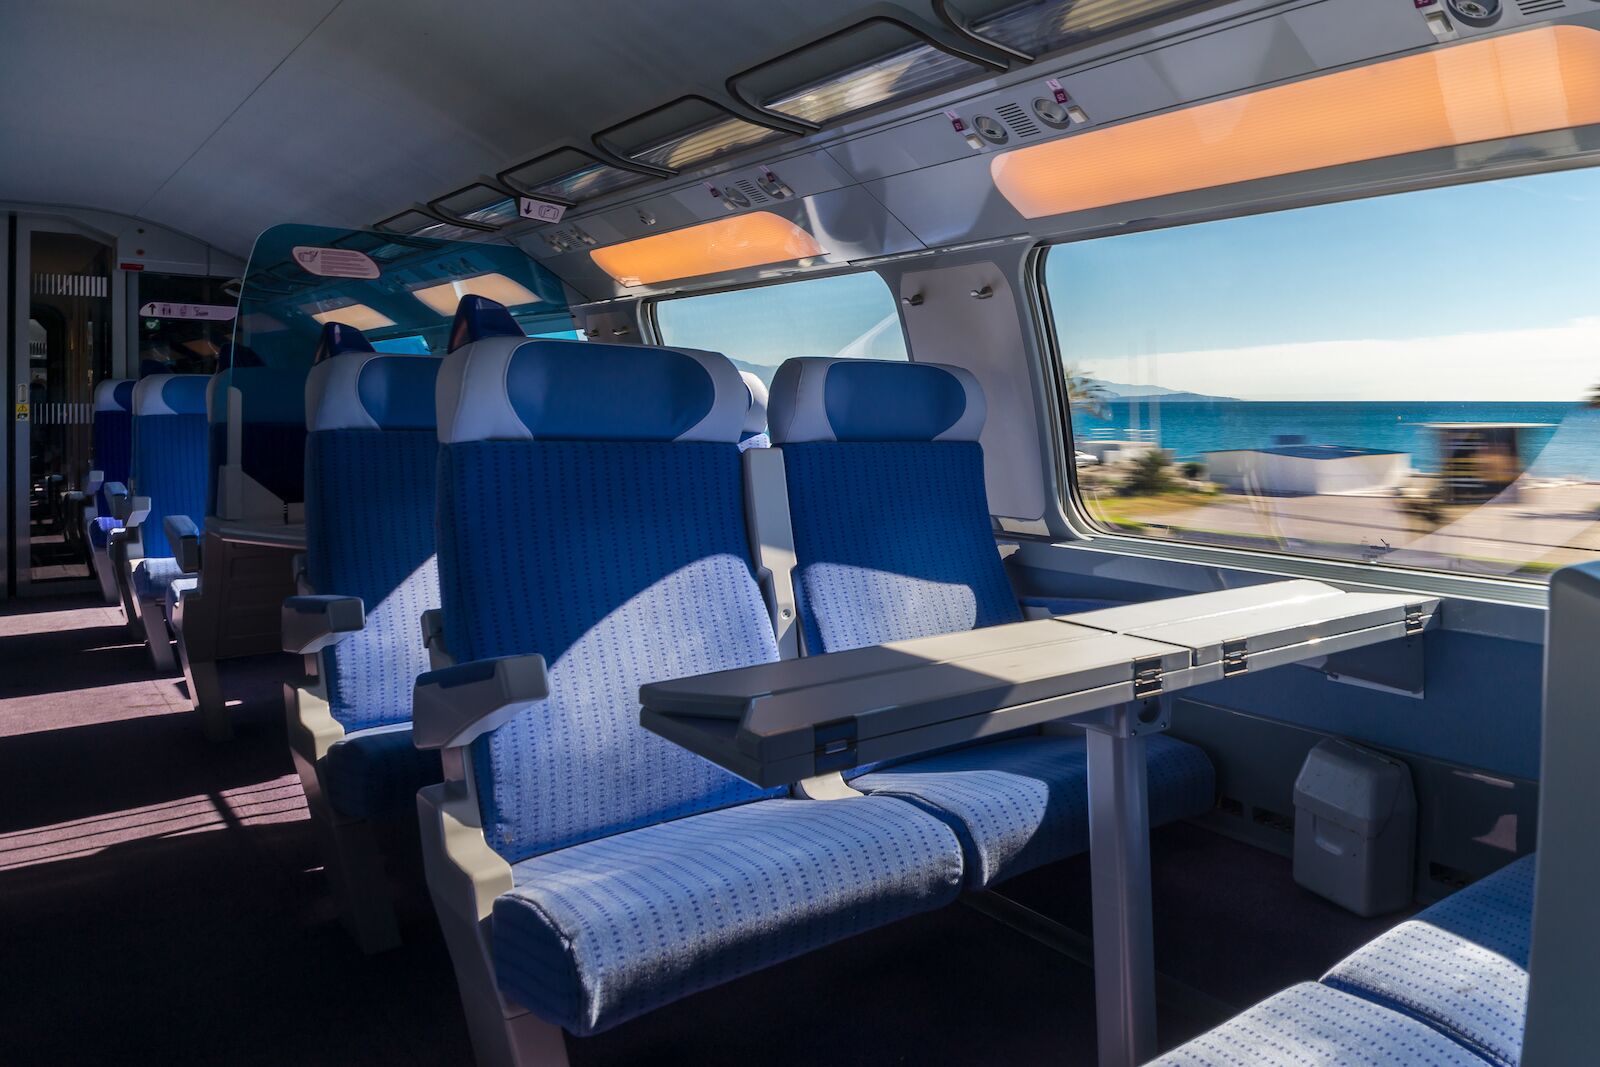 Seats inside the TGV InOui, the high-speed train that runs between Paris and Barcelona